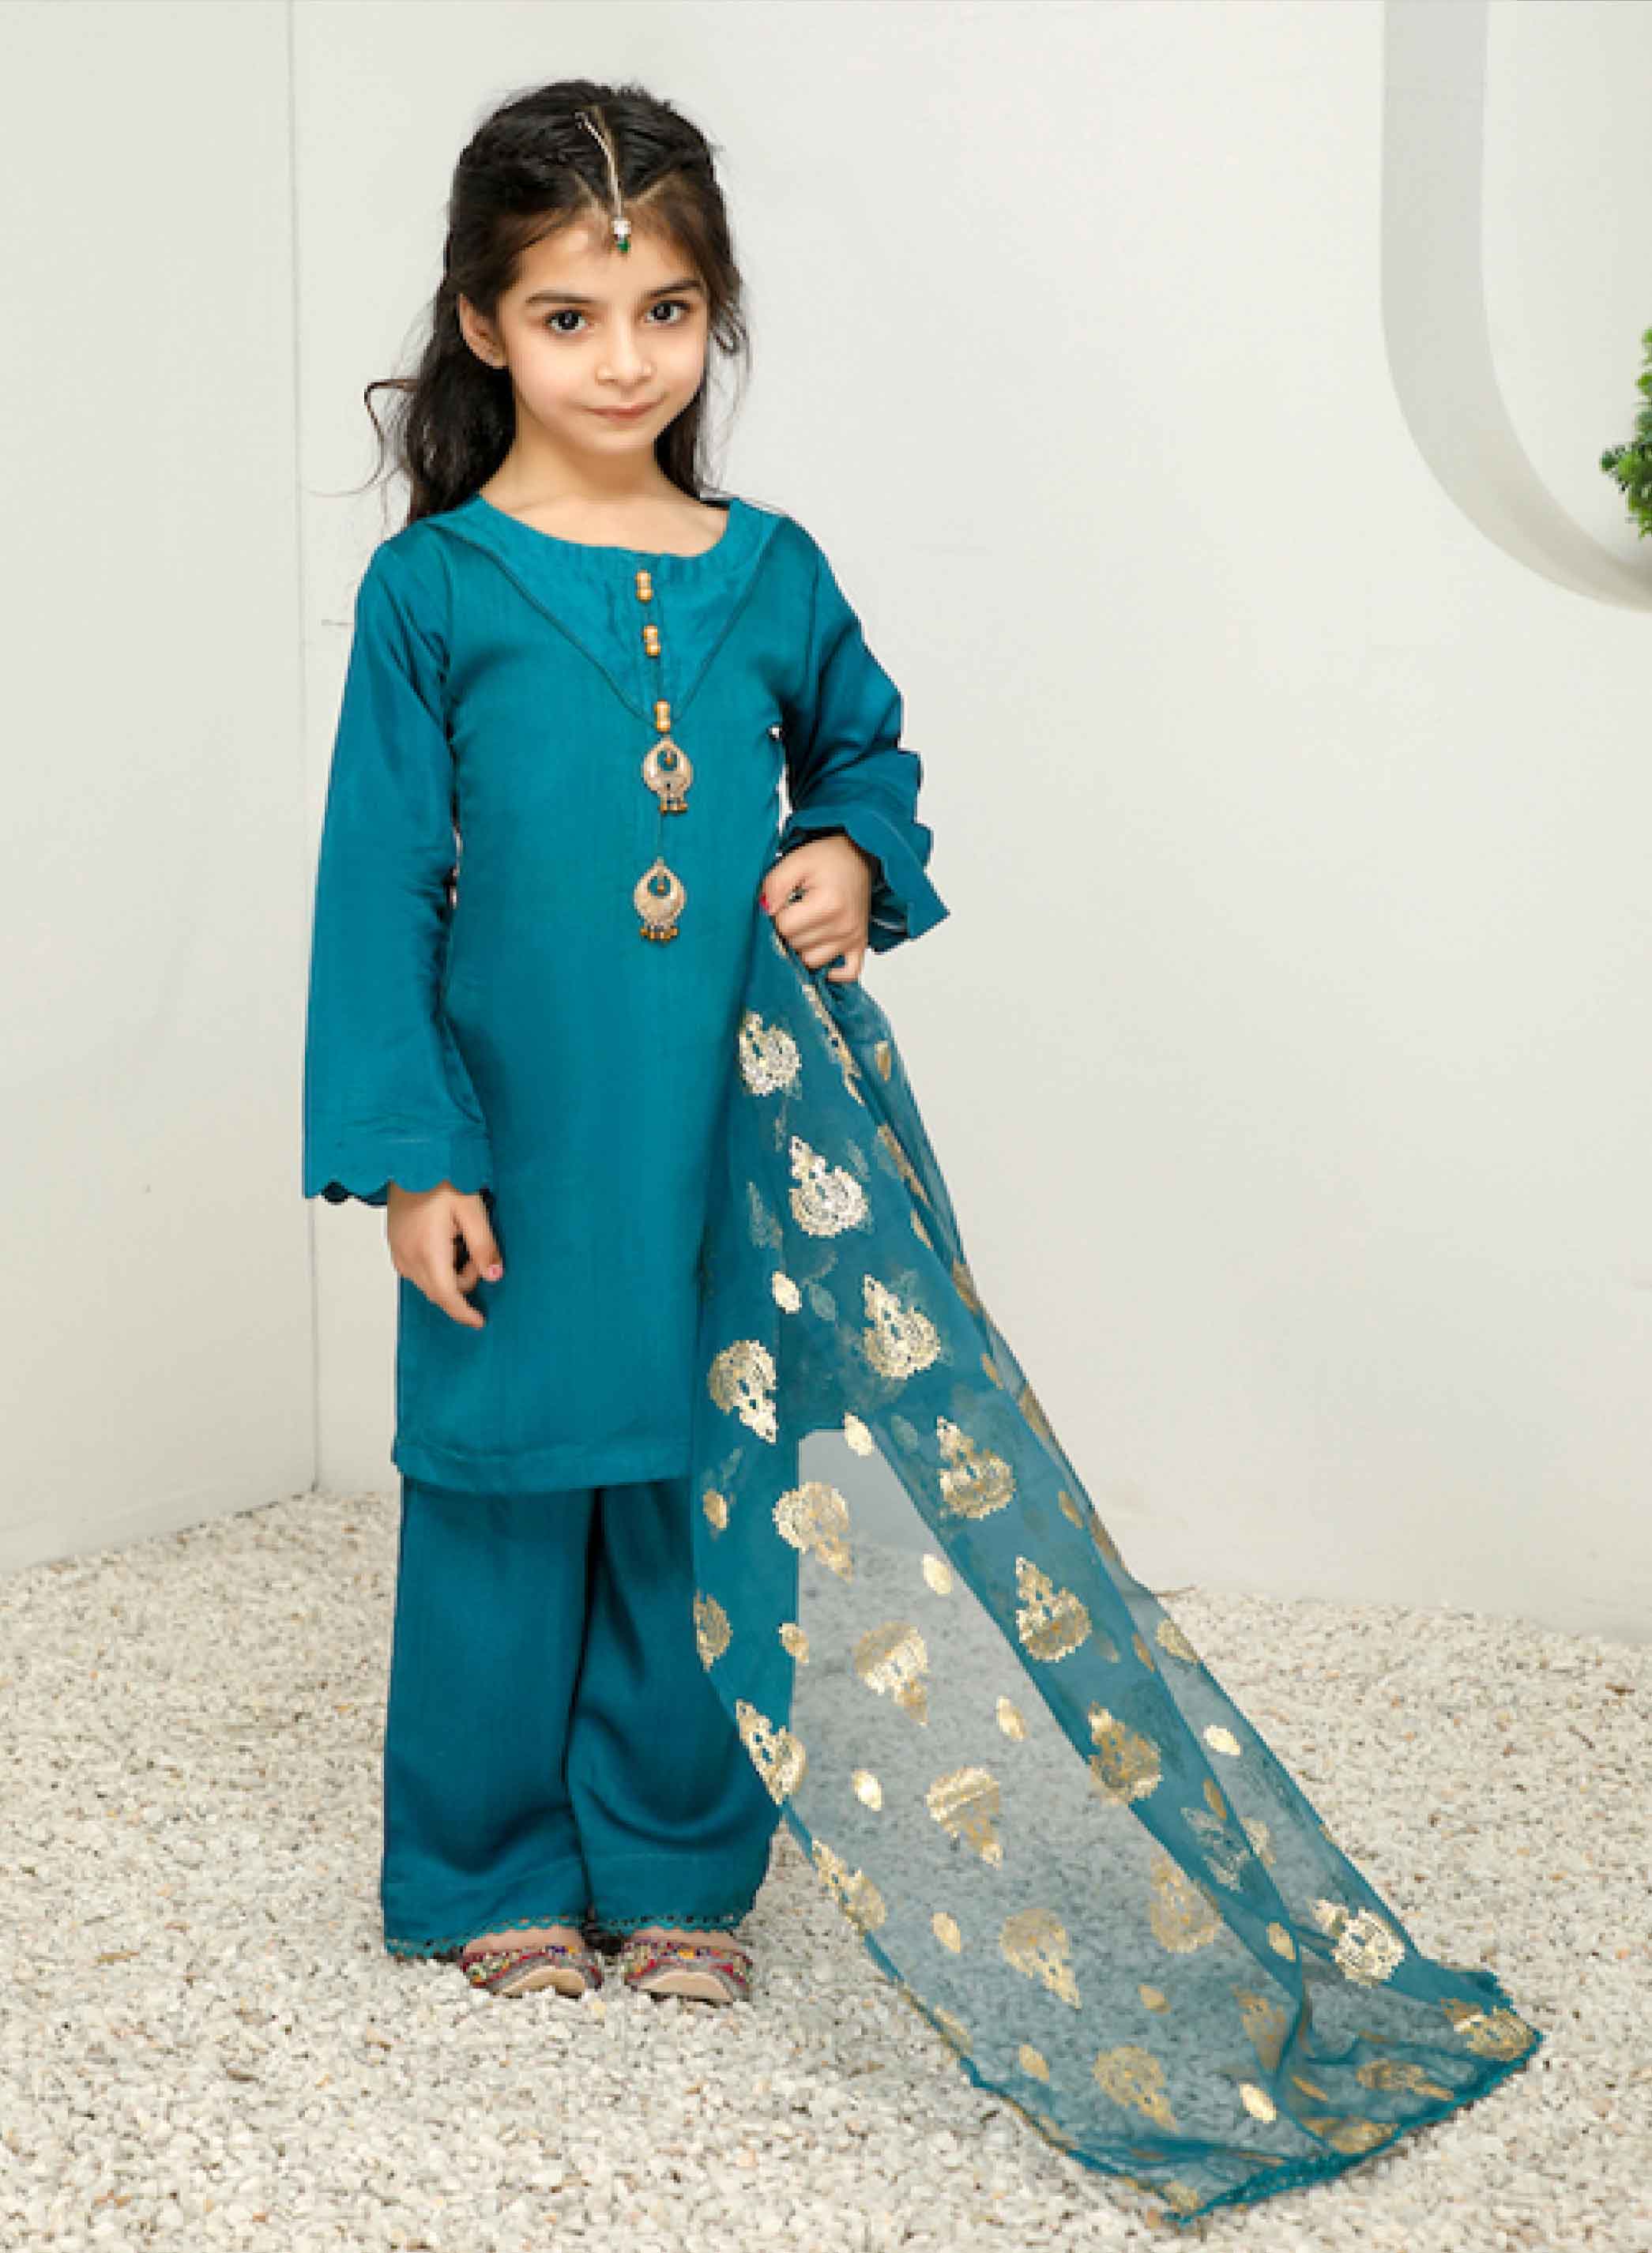 Simrans Girls Mummy & Me Eid Outfit with Foil Print Dupatta PN07K DesiPosh